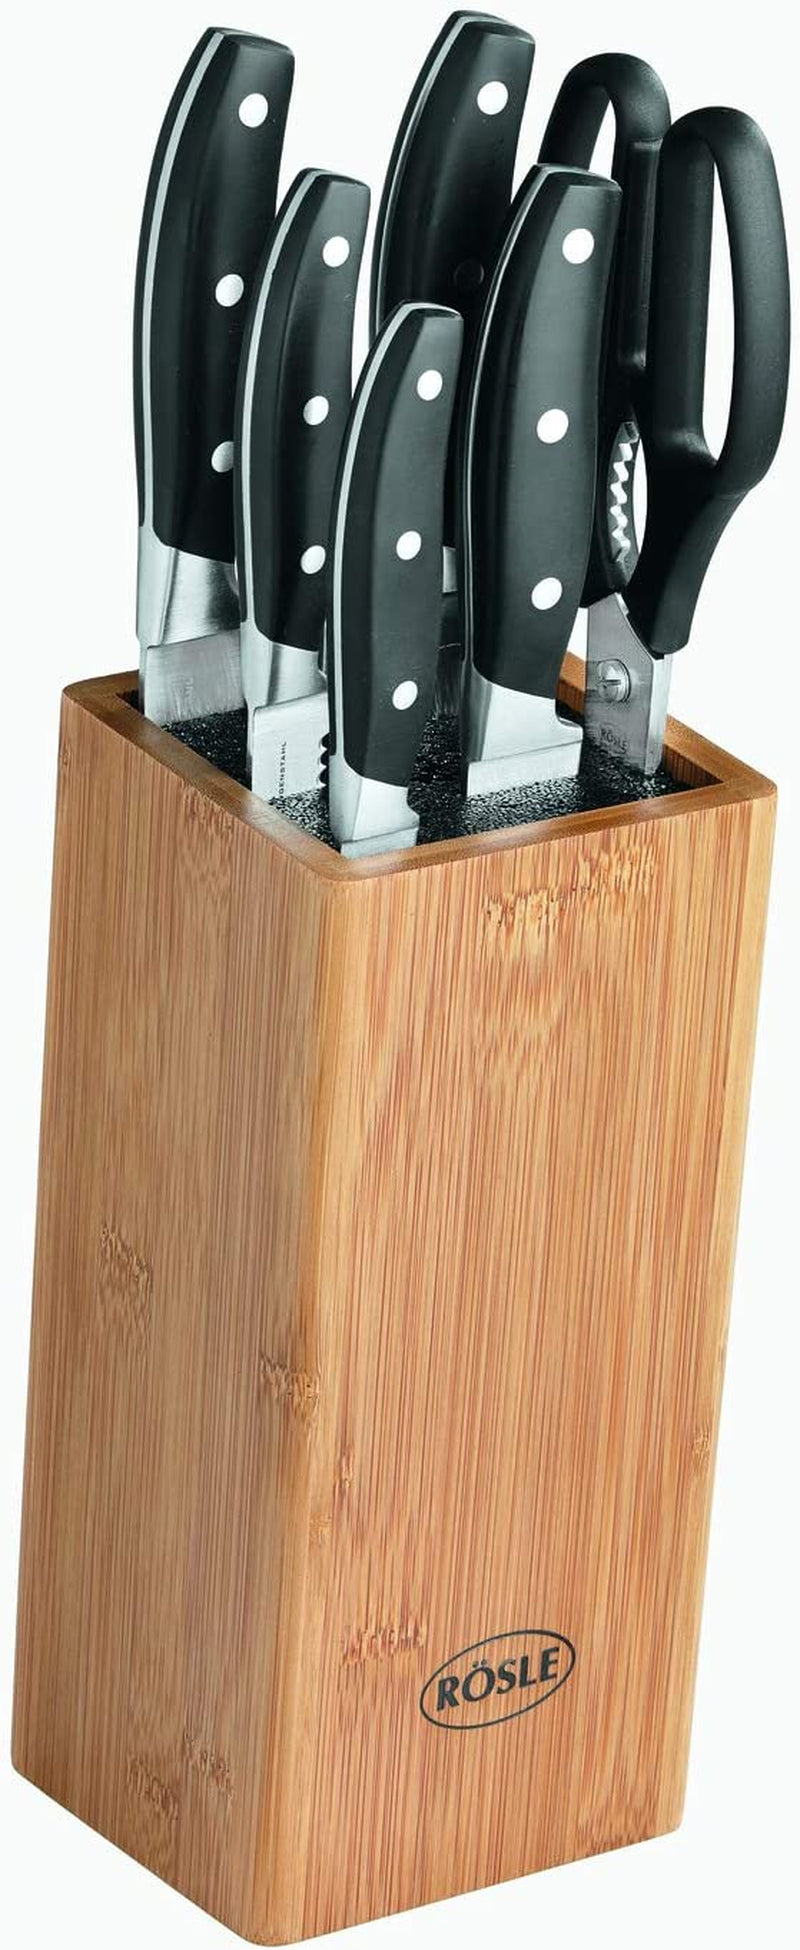 Rösle German Knife Set in Bamboo Block, 5-Piece Set plus Scissors